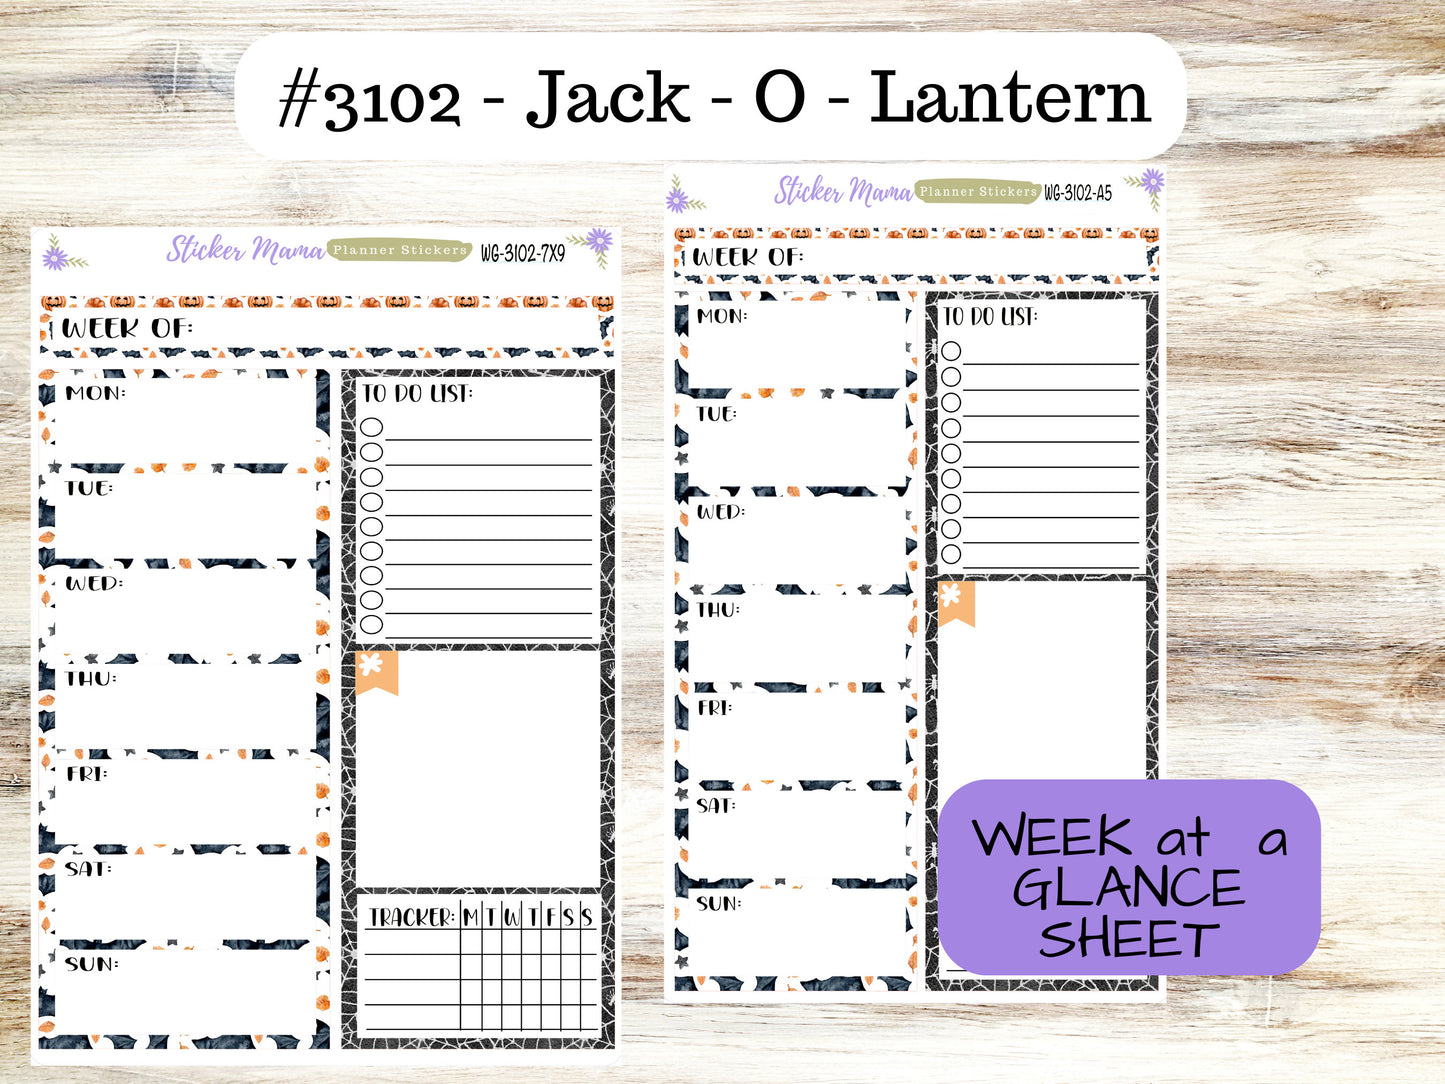 WEEK at a GLANCE-Kit #3102 || Jack - O - Lantern || Week at a Glance - weekly glance 7x9 or a5